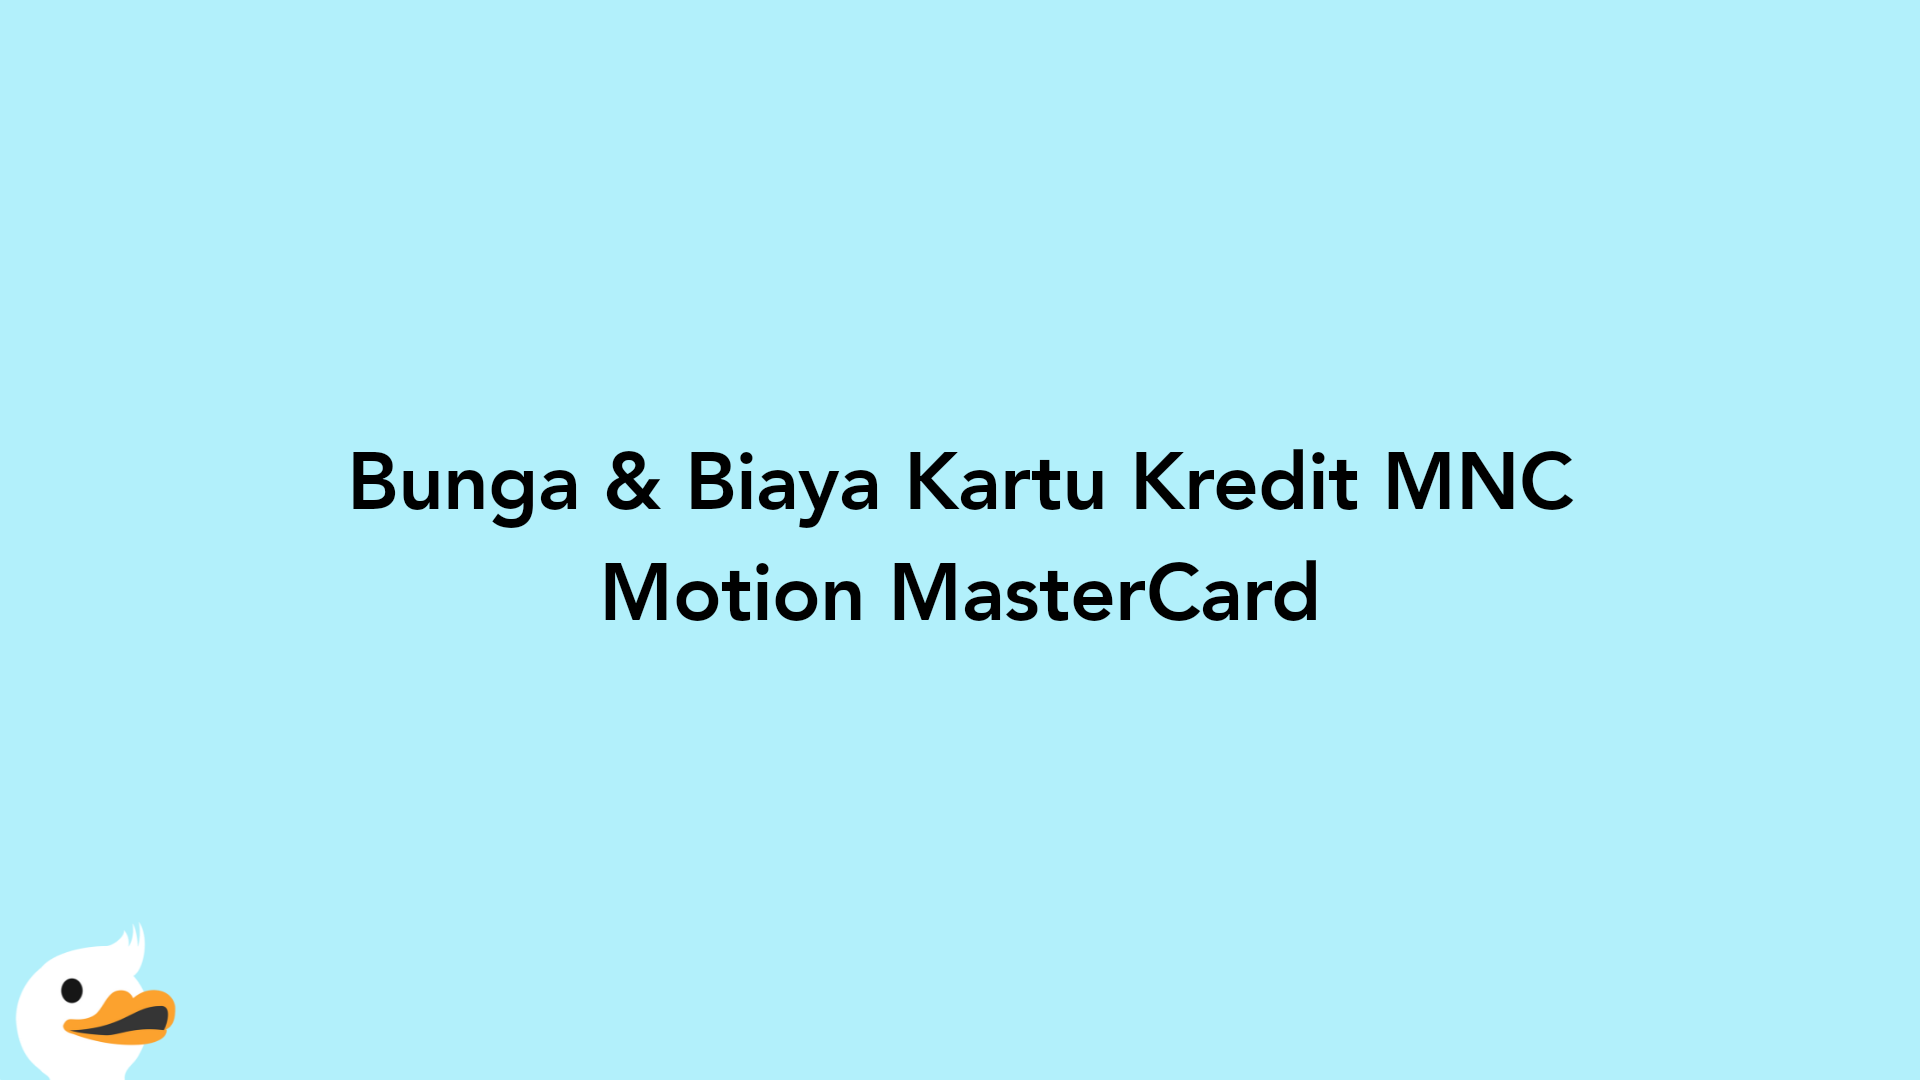 Bunga & Biaya Kartu Kredit MNC Motion MasterCard